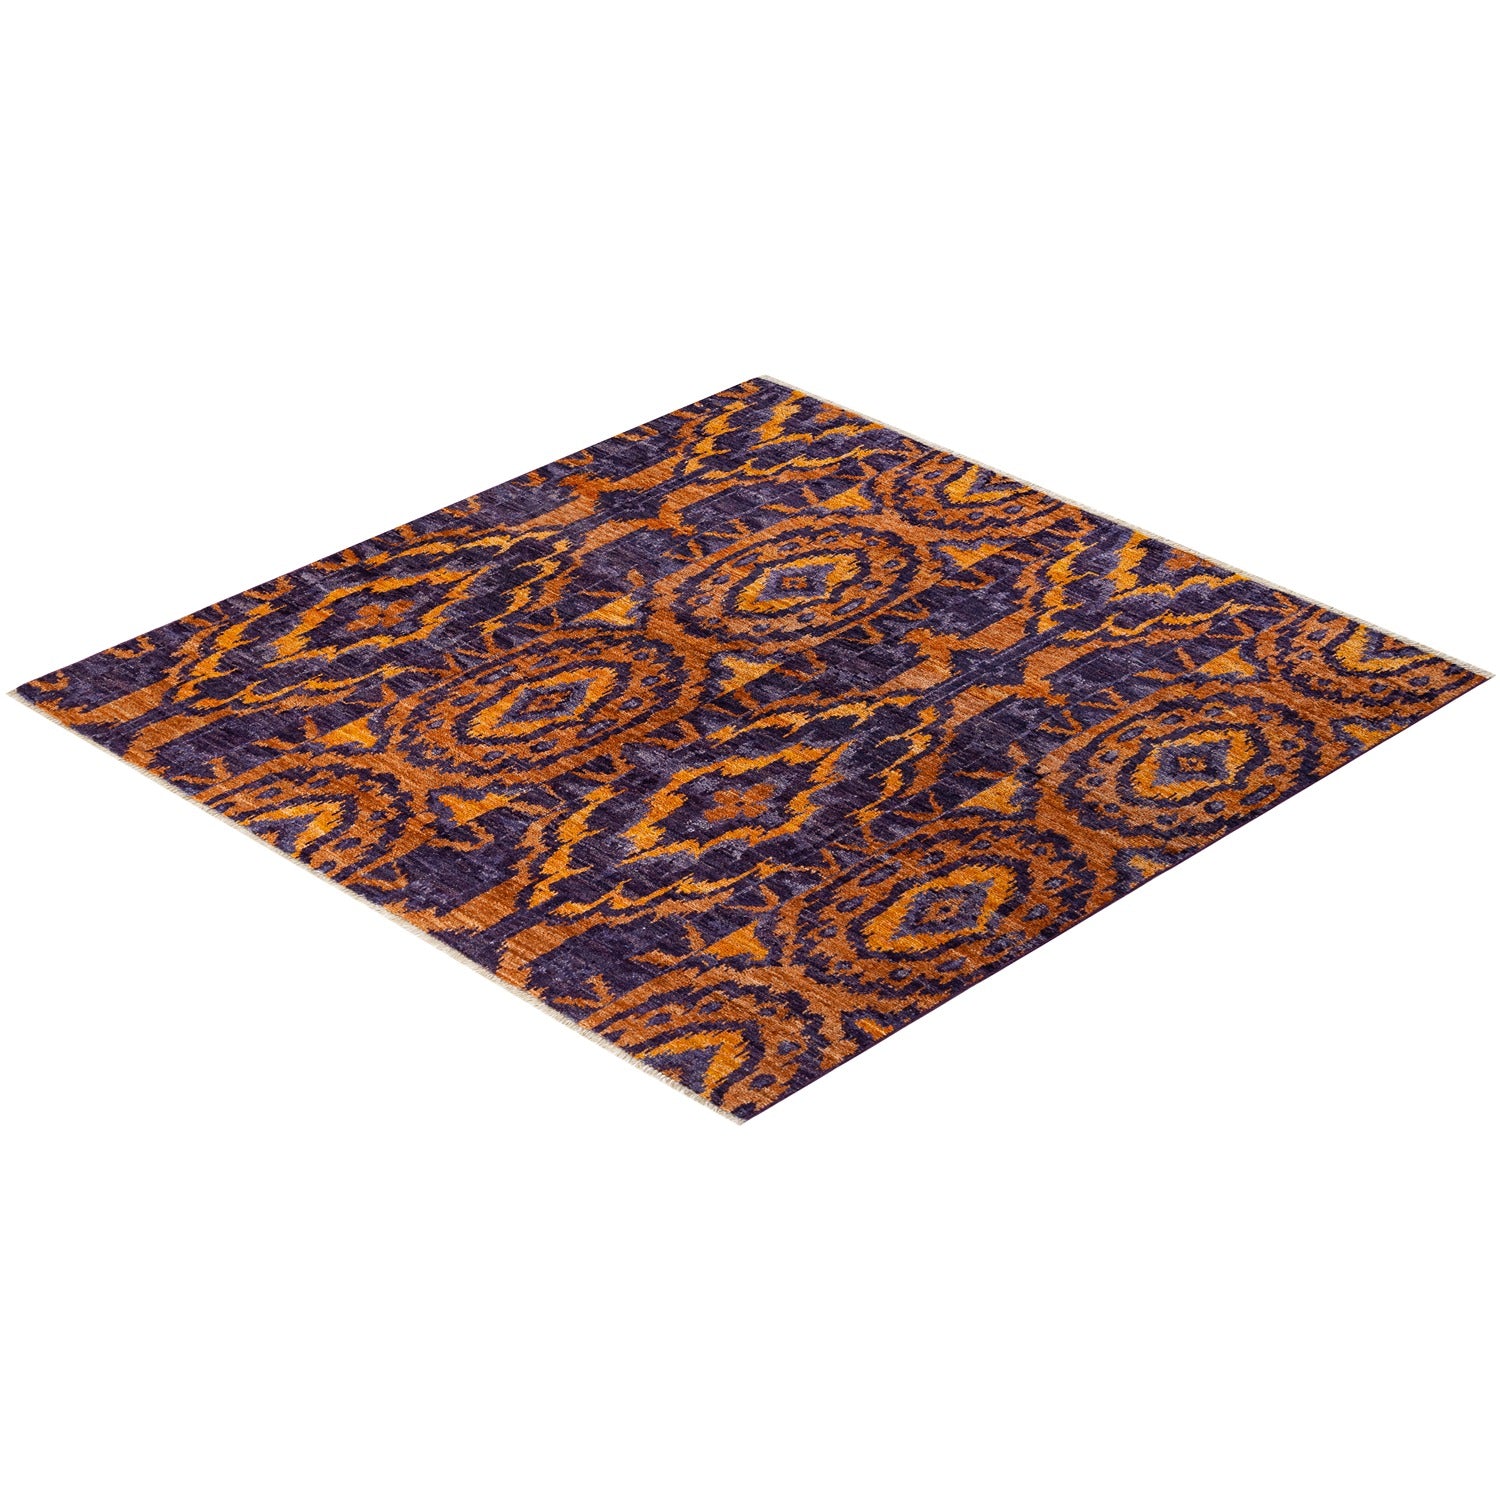 Rectangular rug with diamond-like shape and intricate purple-orange design.